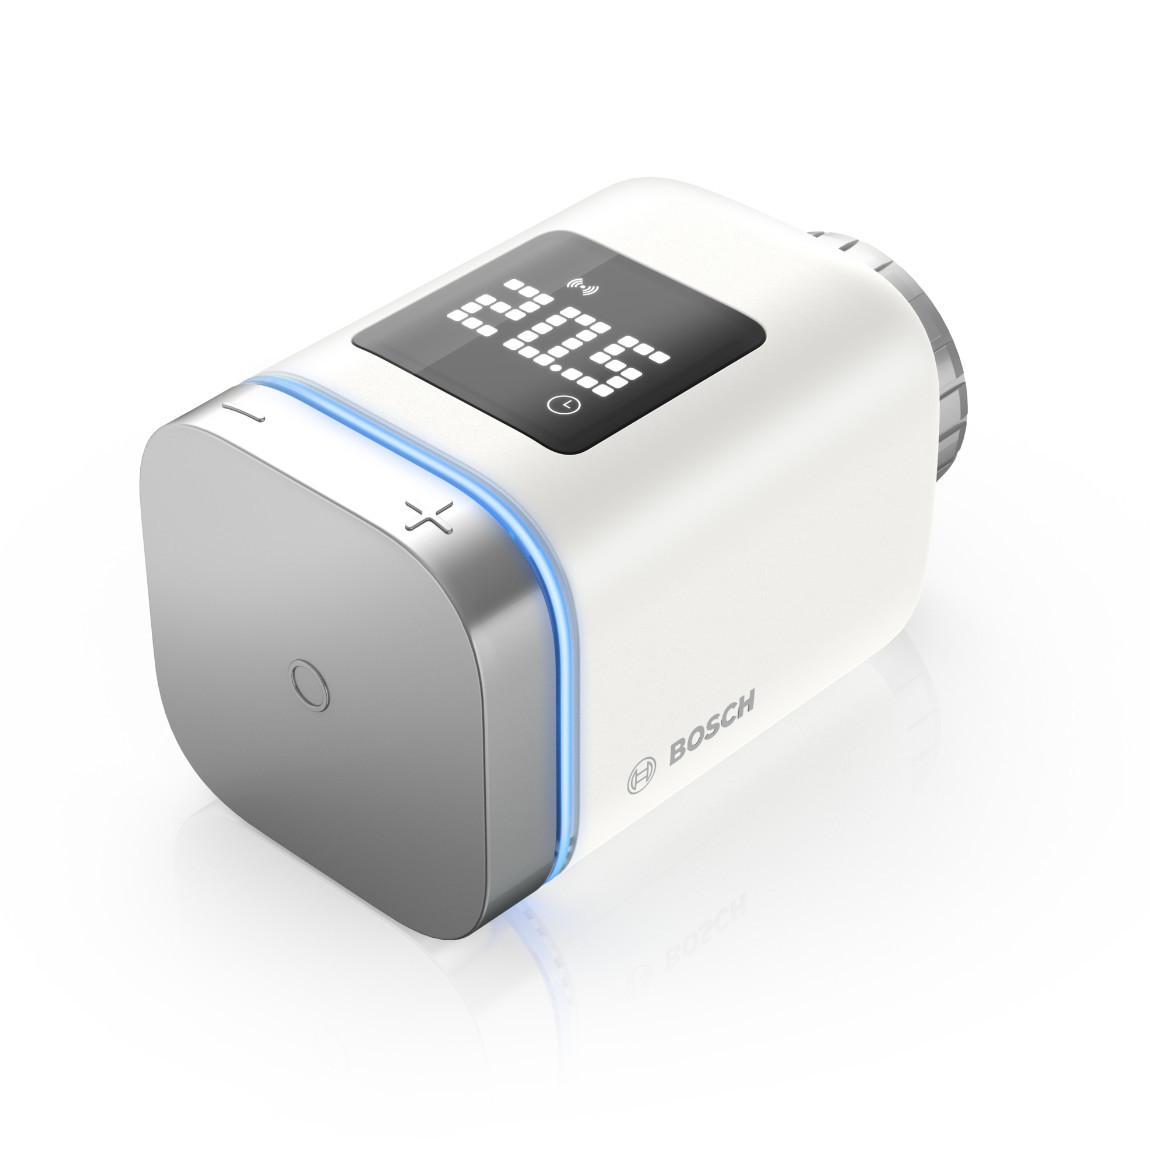 Bosch Smart Home Heizkörper-Thermostat II_schraeg blaue LED